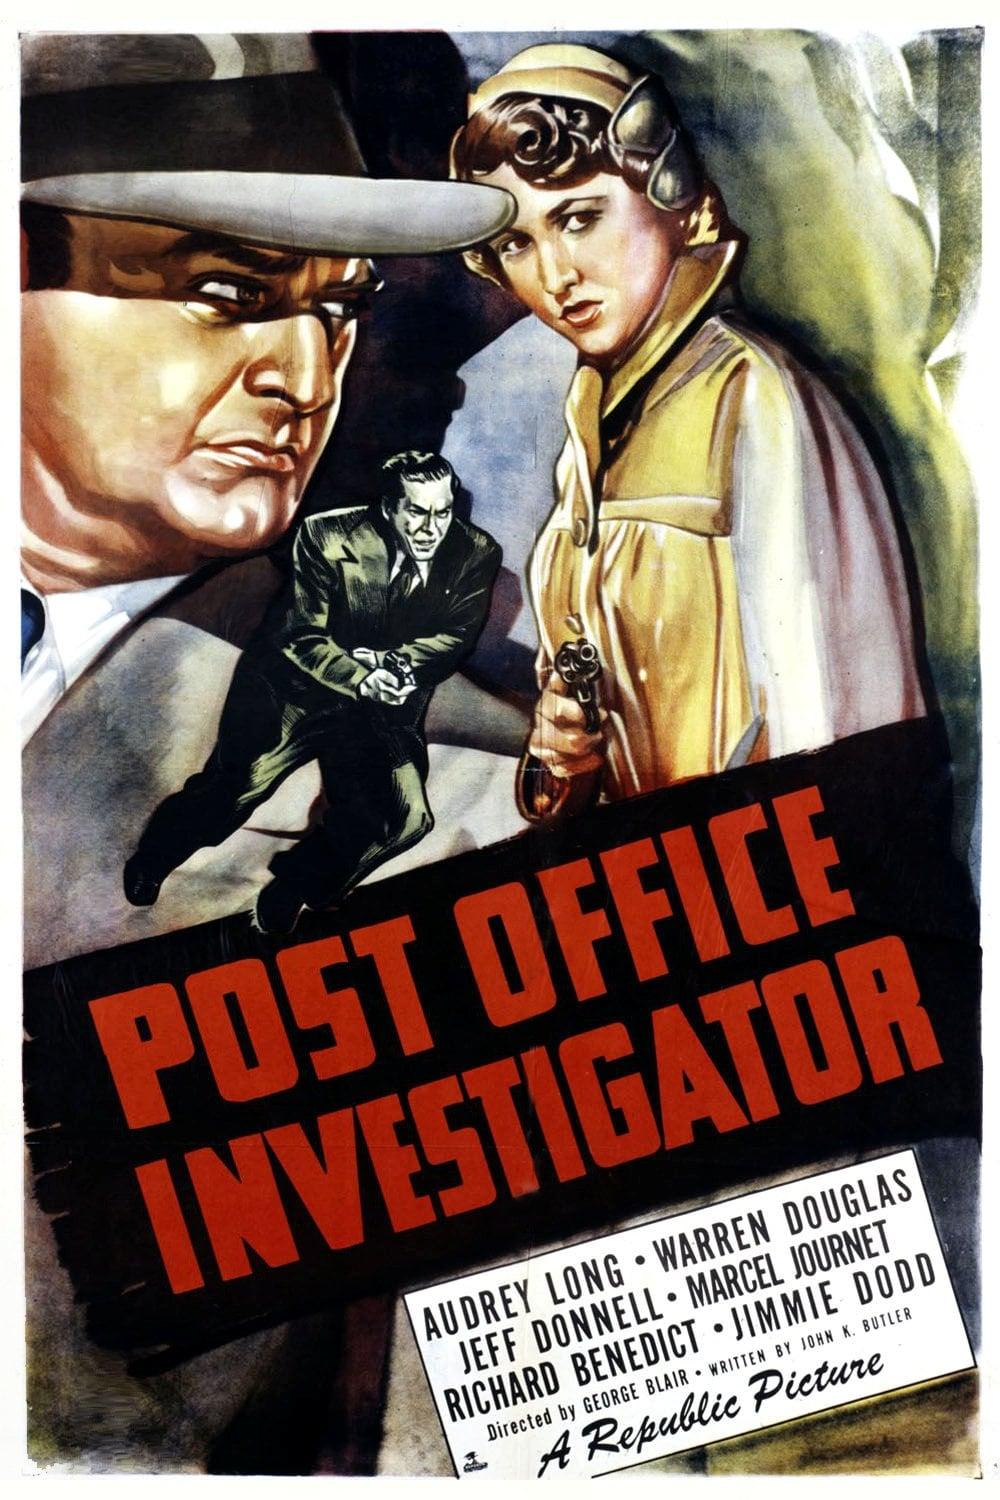 Post Office Investigator poster